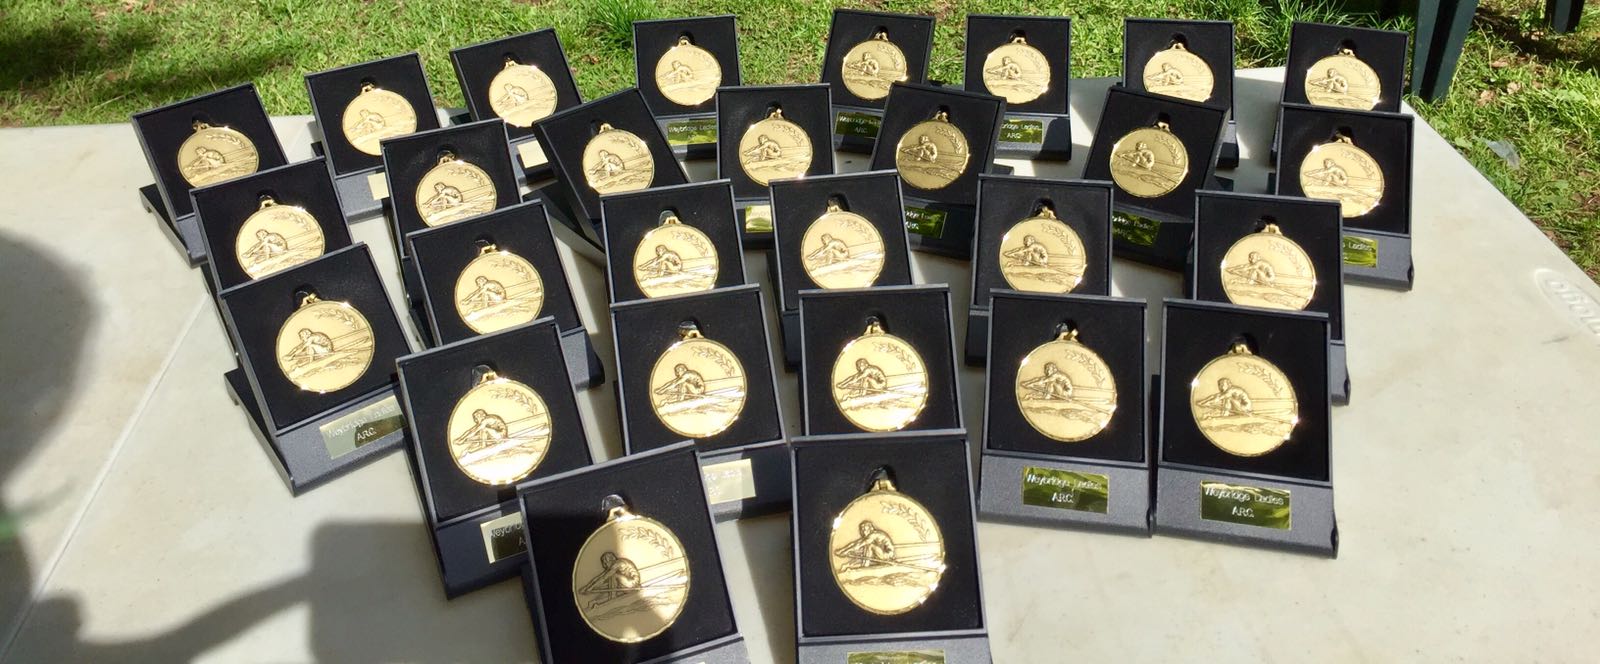 Medals for Reagatta at Weybridge Ladies Amateur Rowing Club